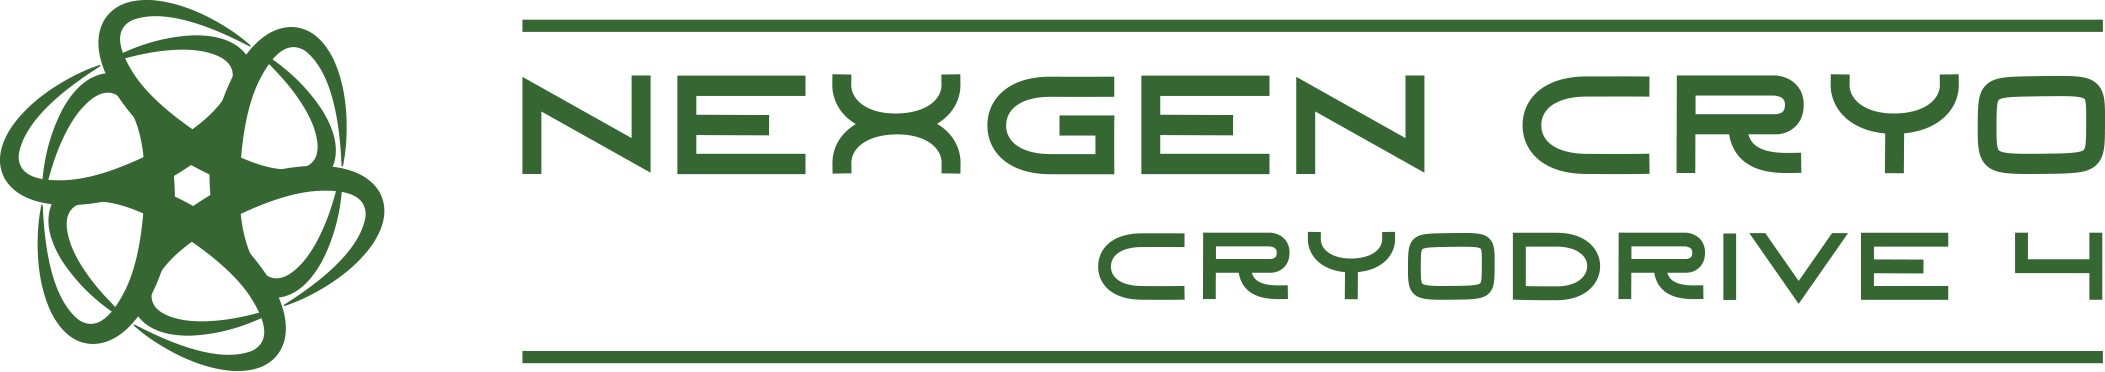 NexGen Cryogenic Solution, Inc